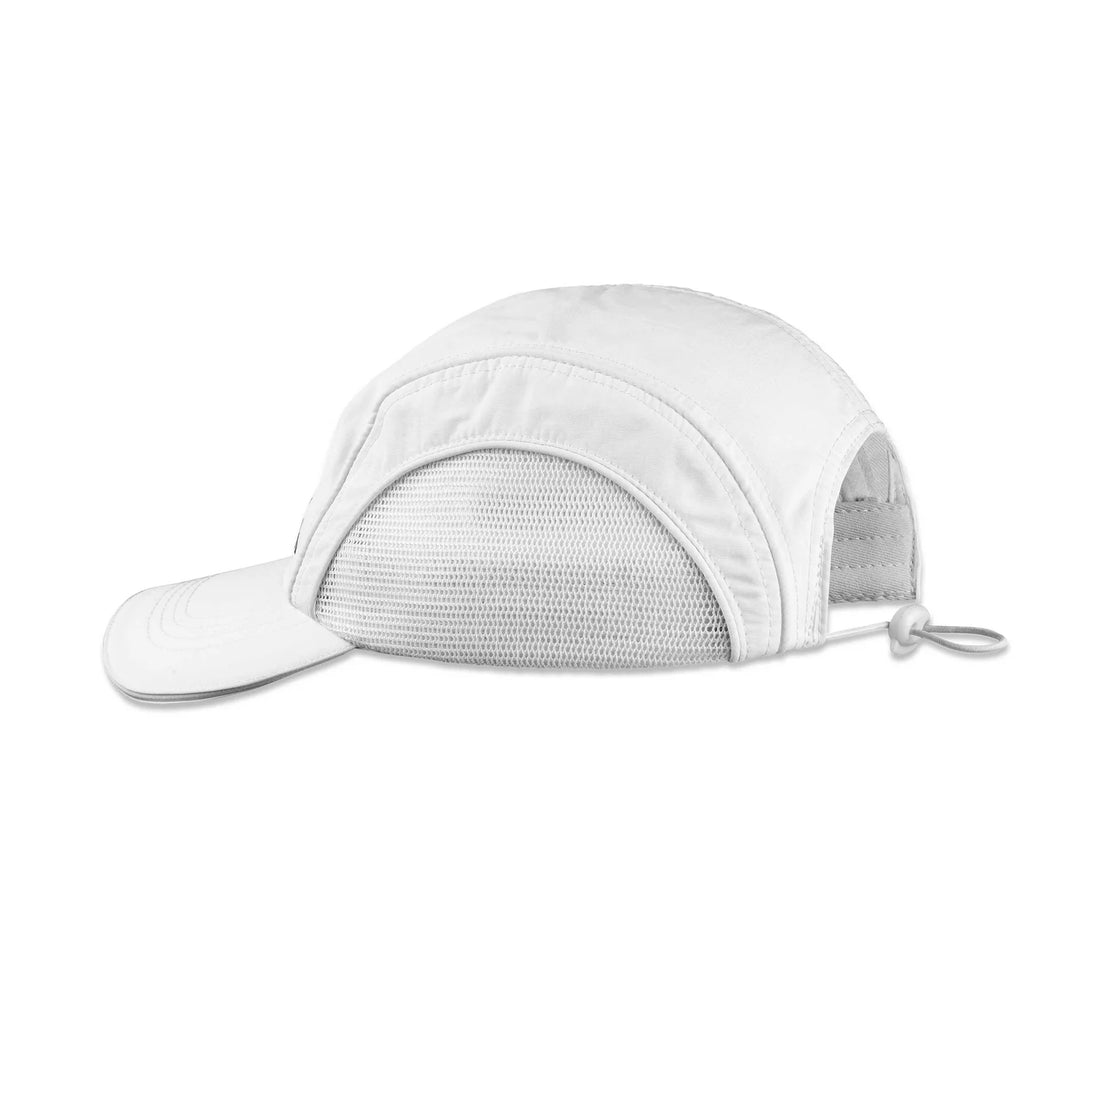 THE WHITE CAP